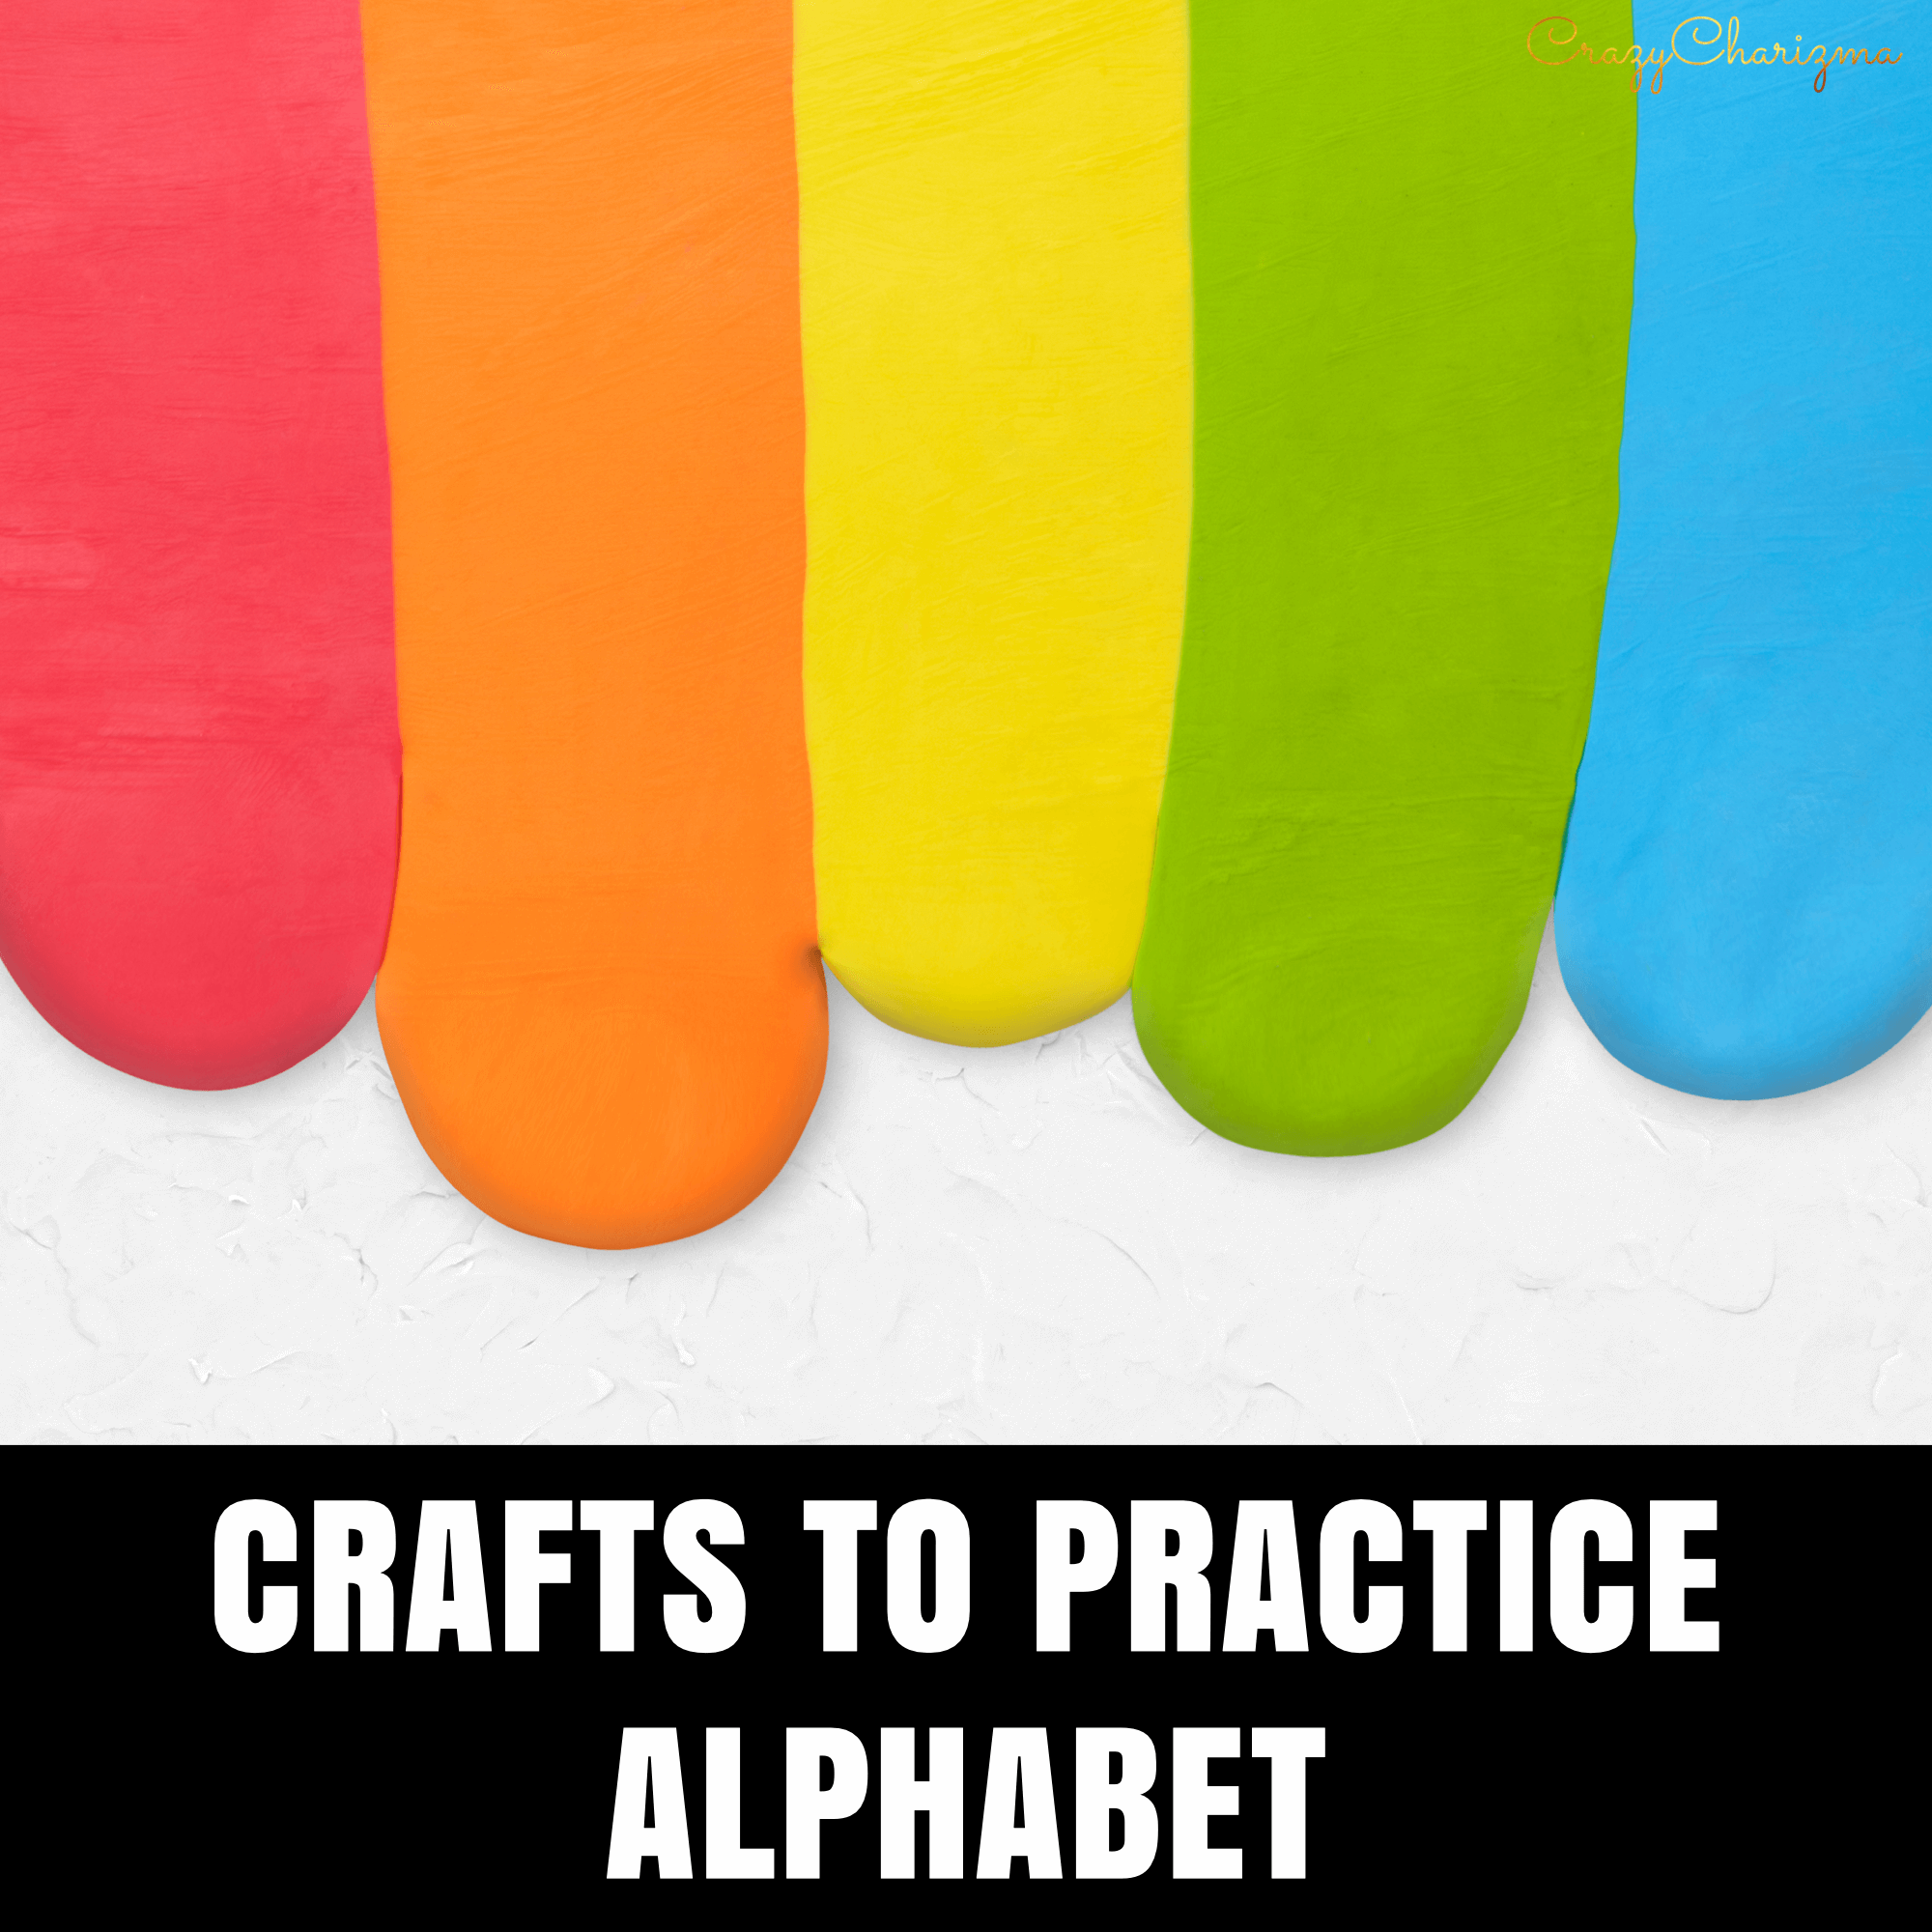 Crafts to Practice Alphabet